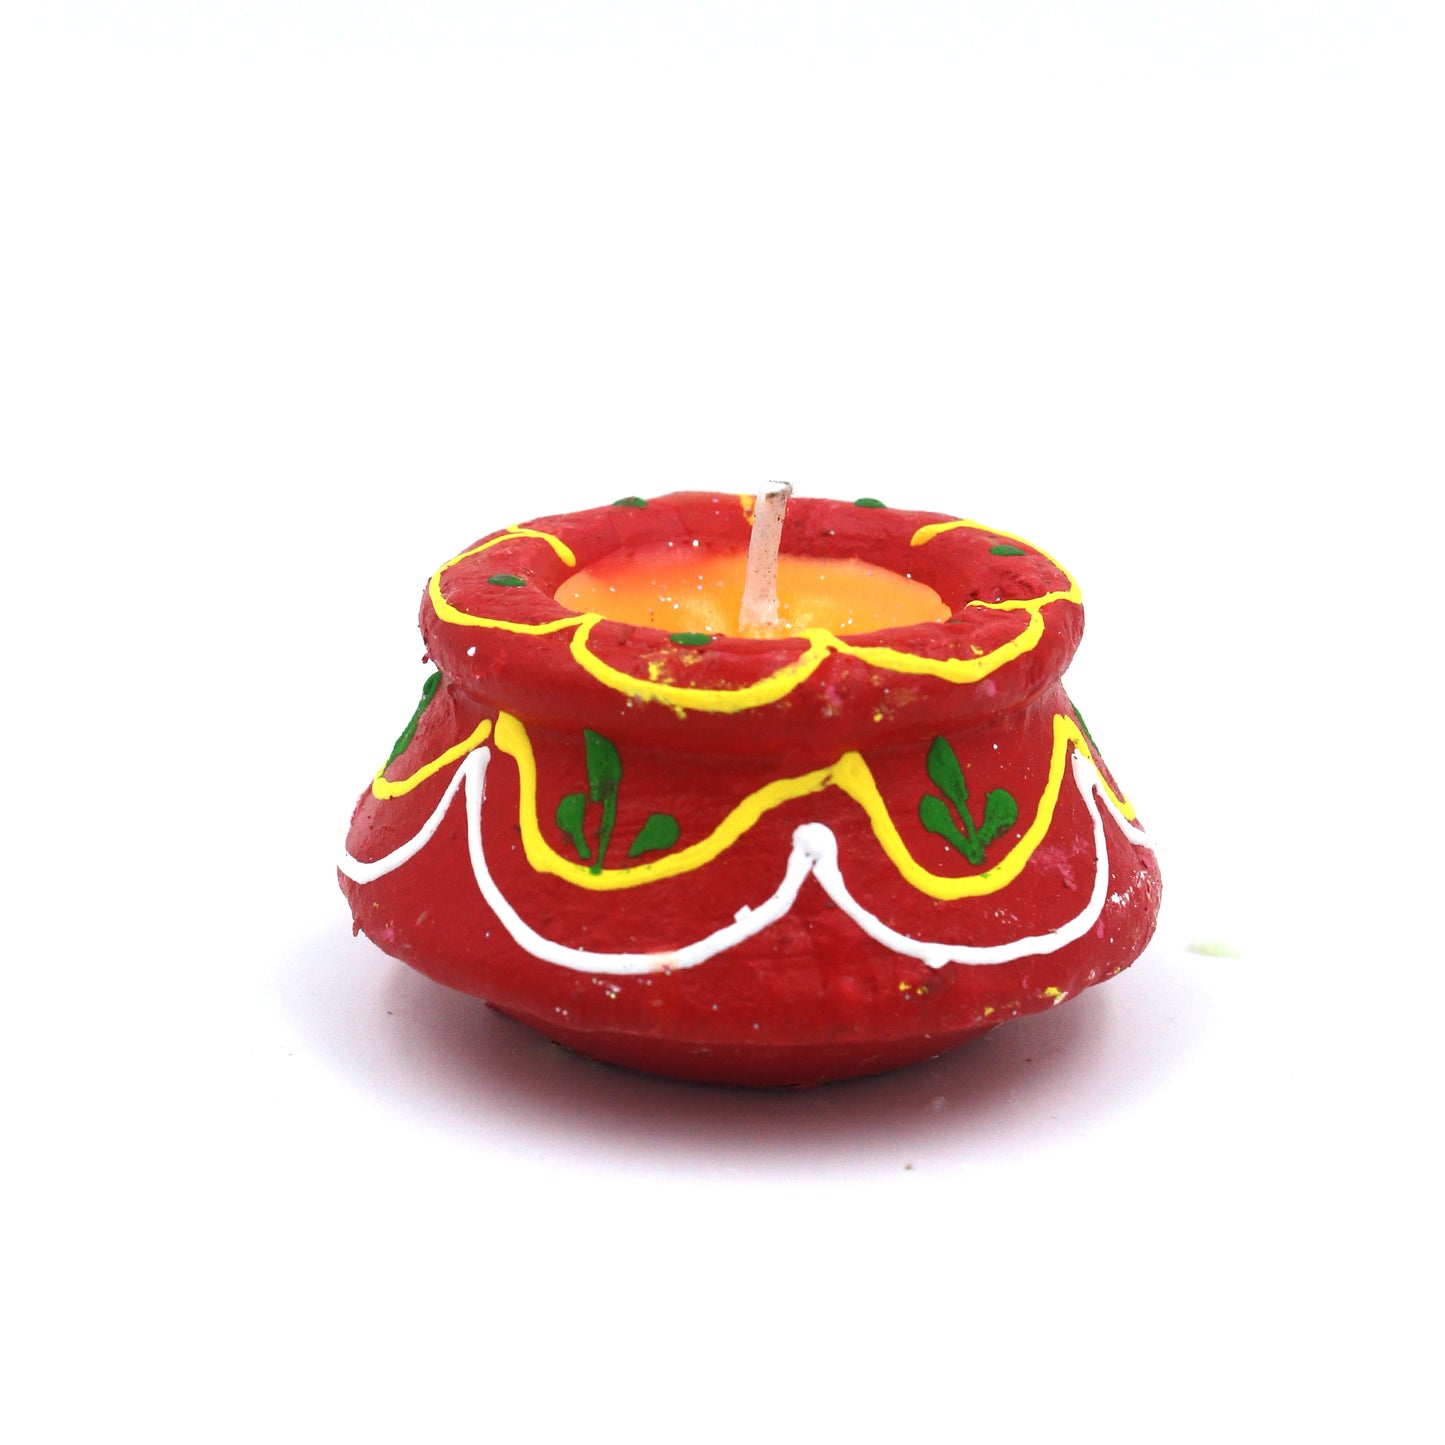 10 Pc Set Matki Clay Diya Wax Filled Diyas for Diwali Home Decoration - Handmade Clay/Mitti Multicolor Diyas Diwali Decoration